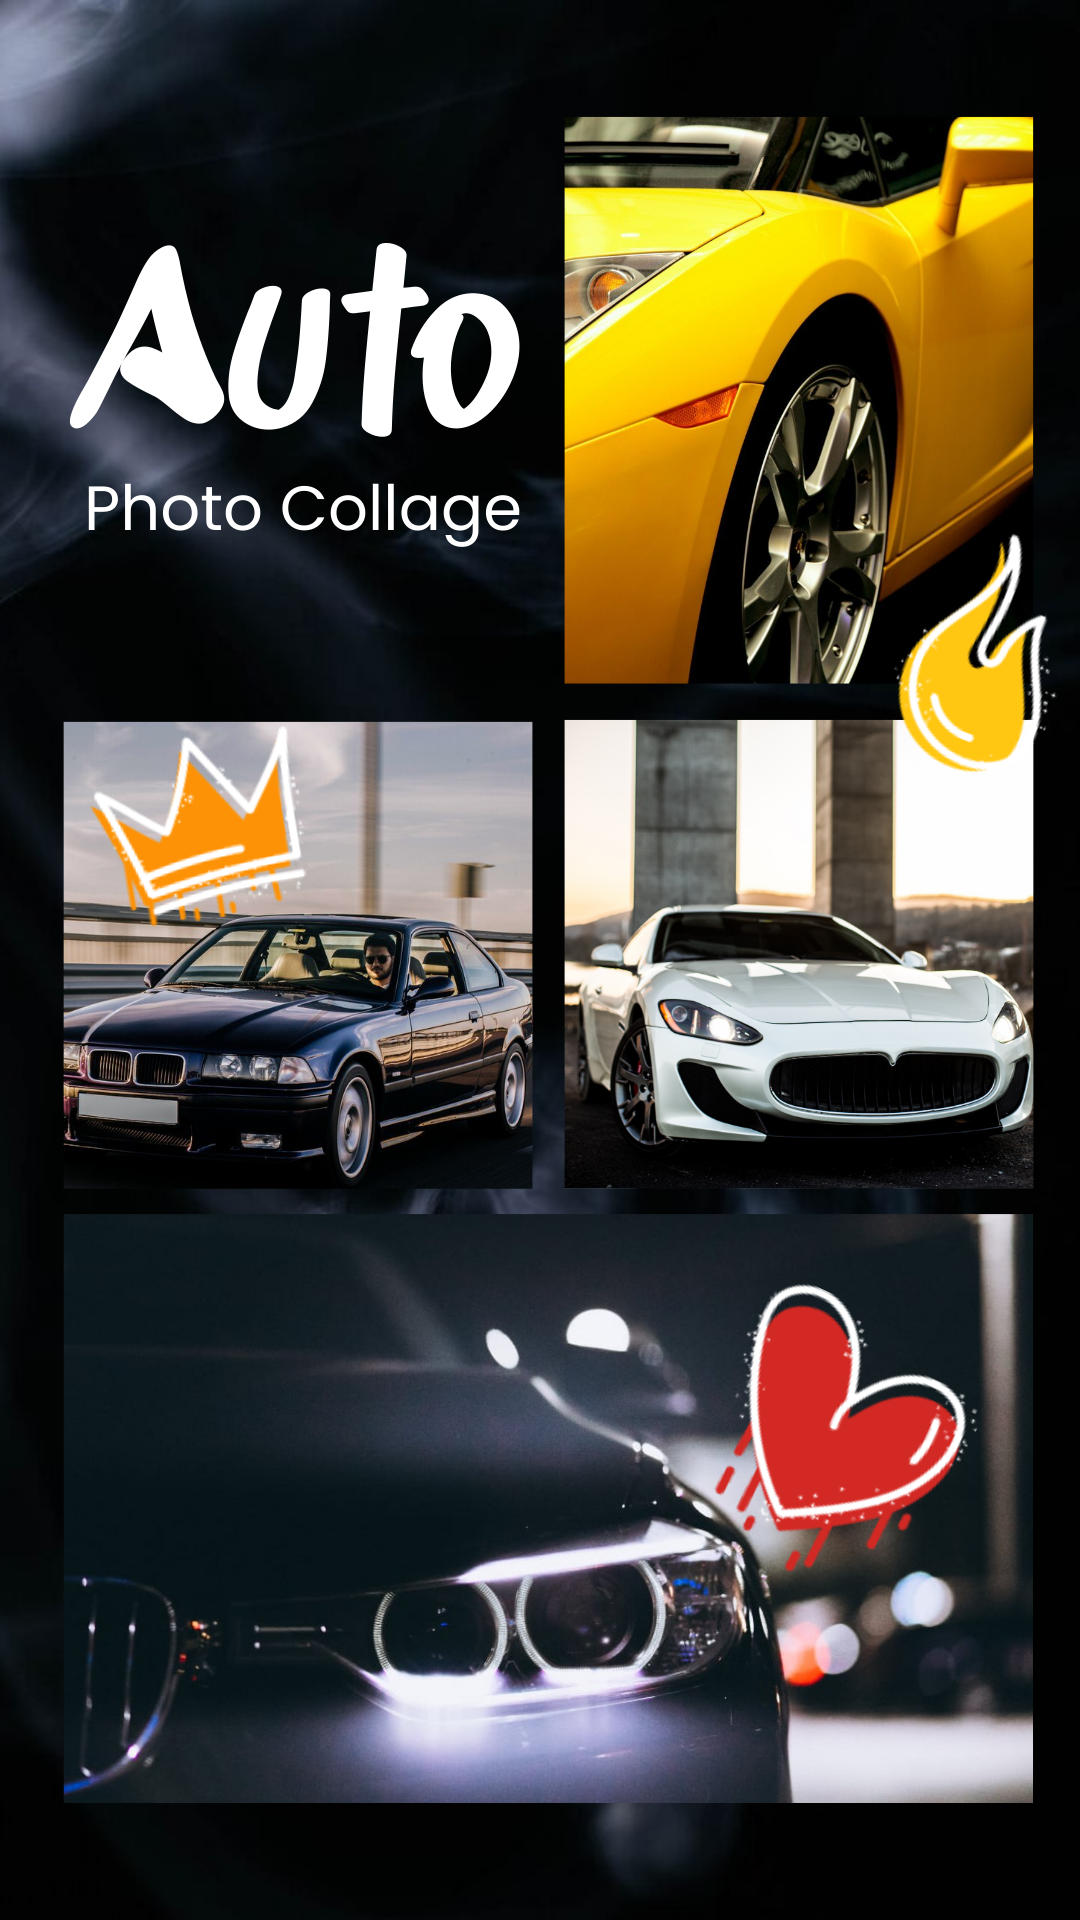 Auto Photo Collage